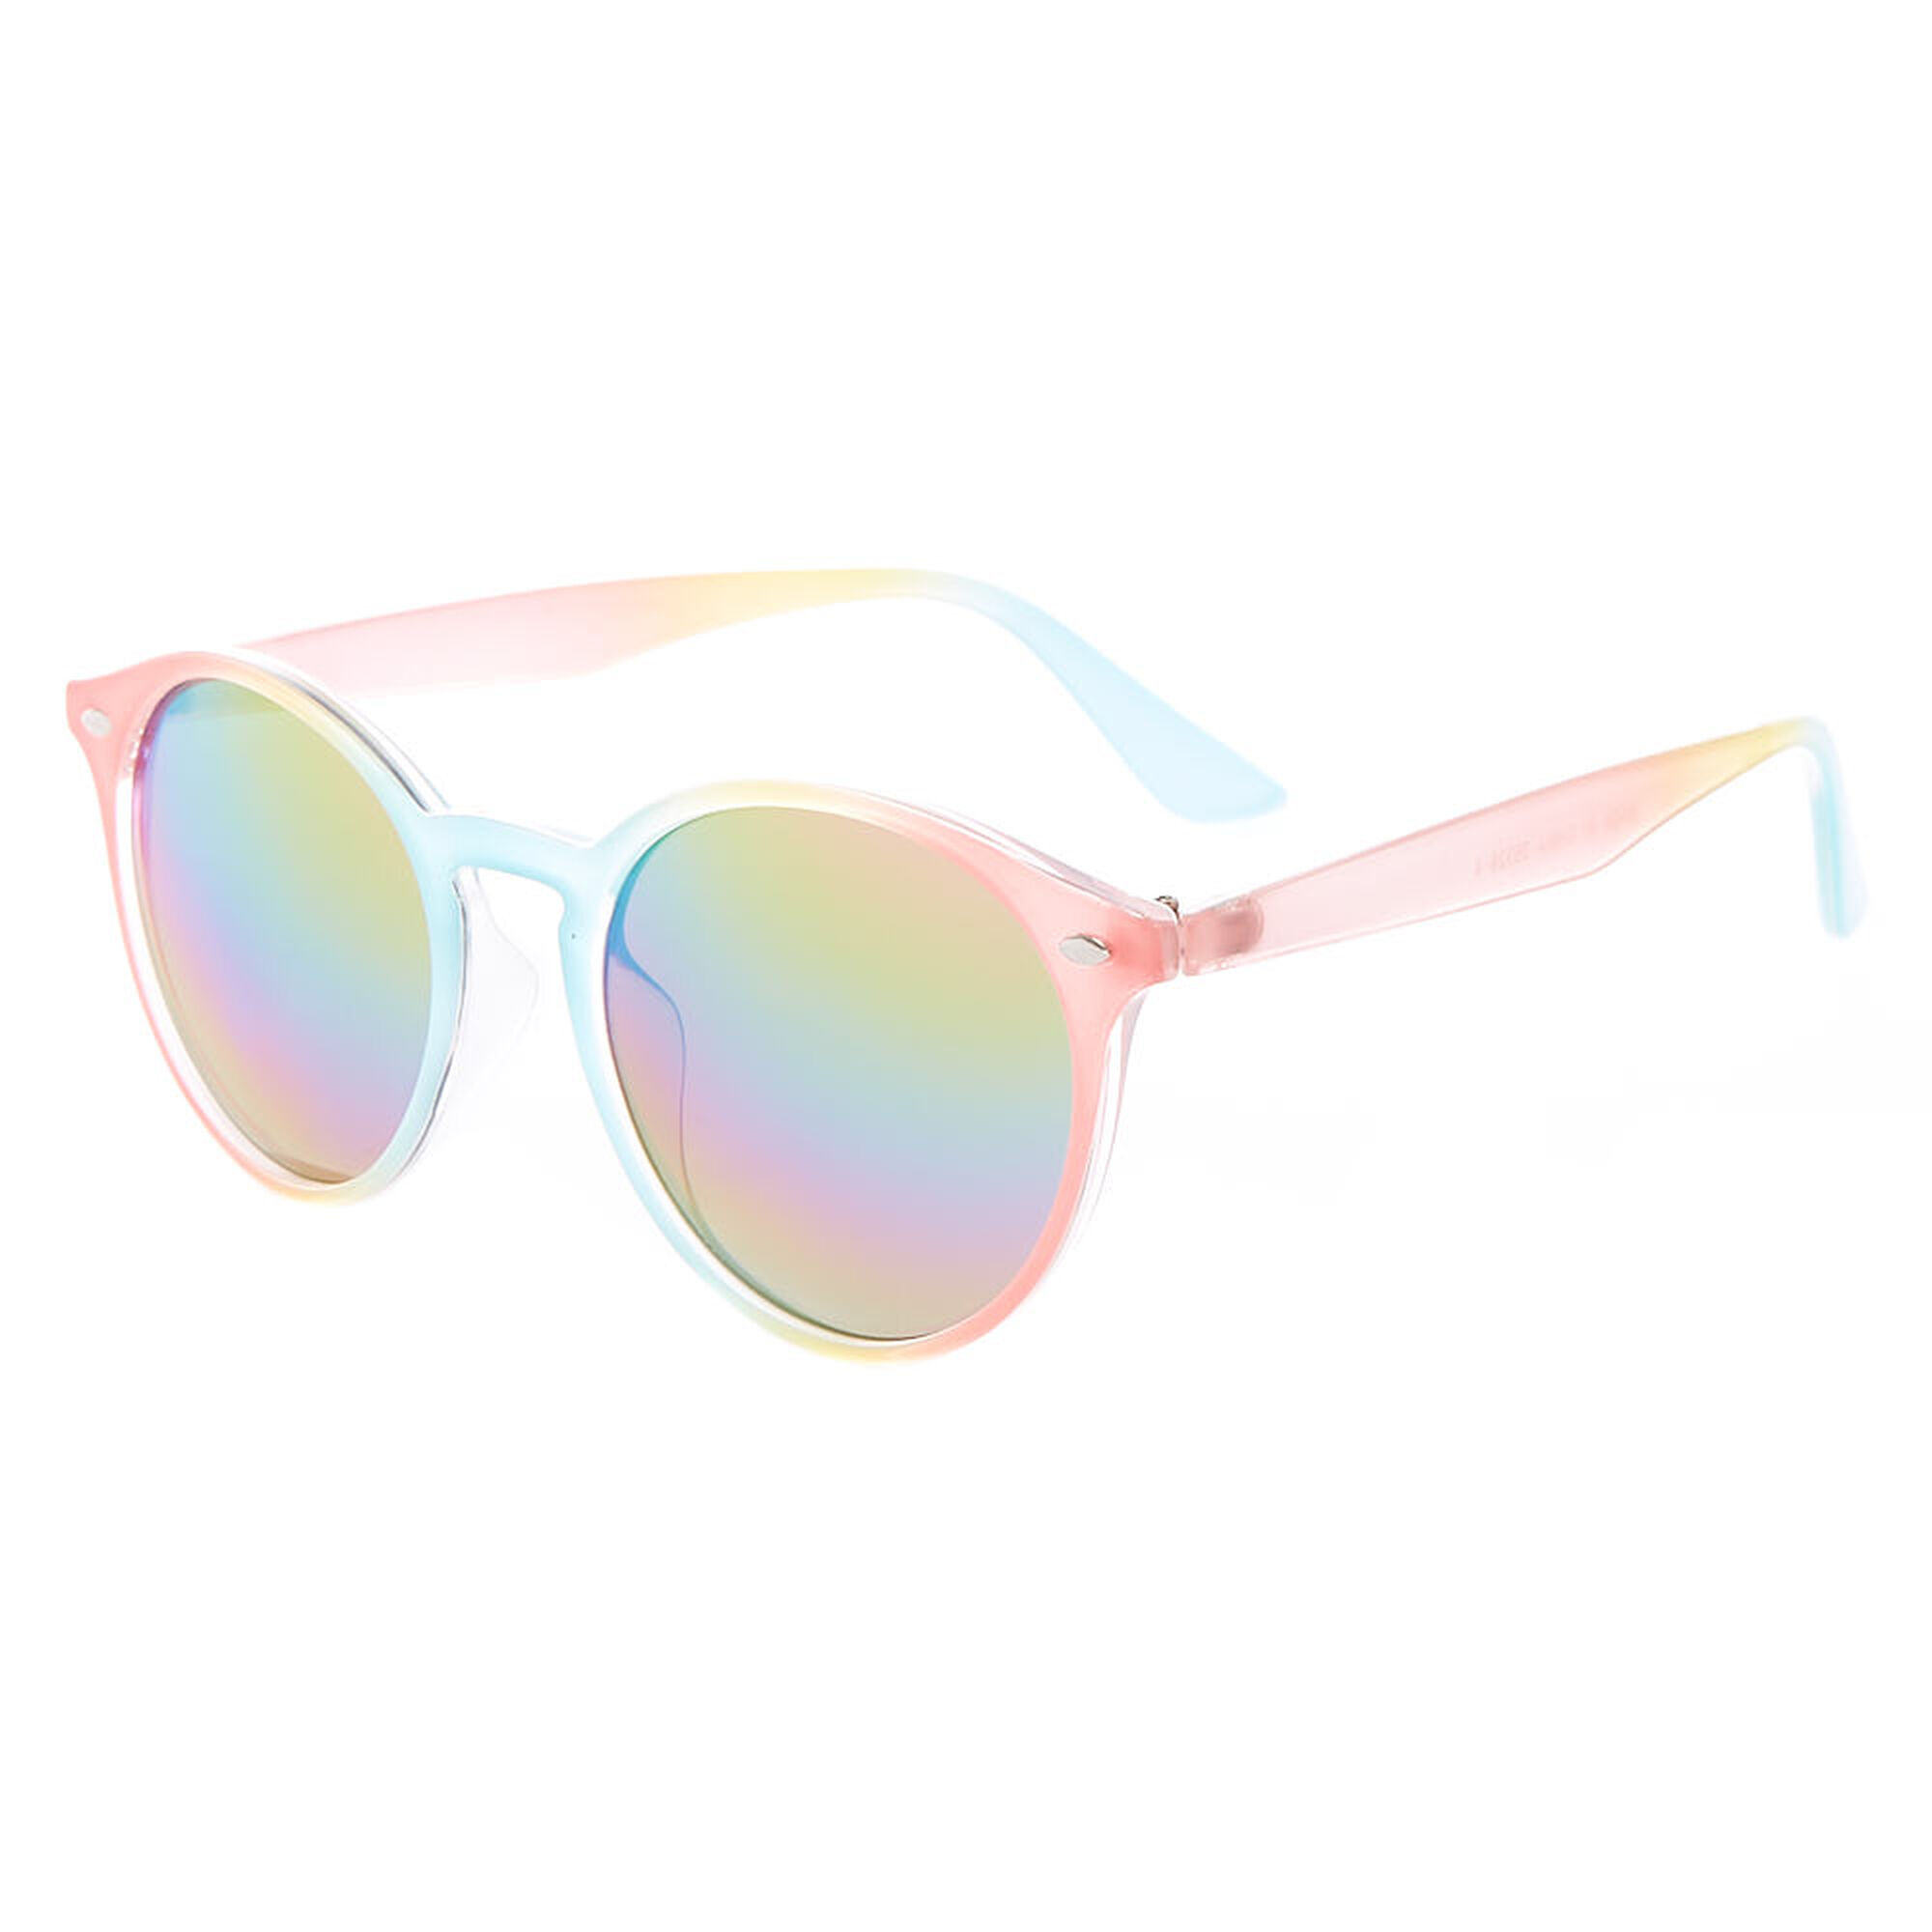 View Claires Pastel Round Sunglasses Rainbow information